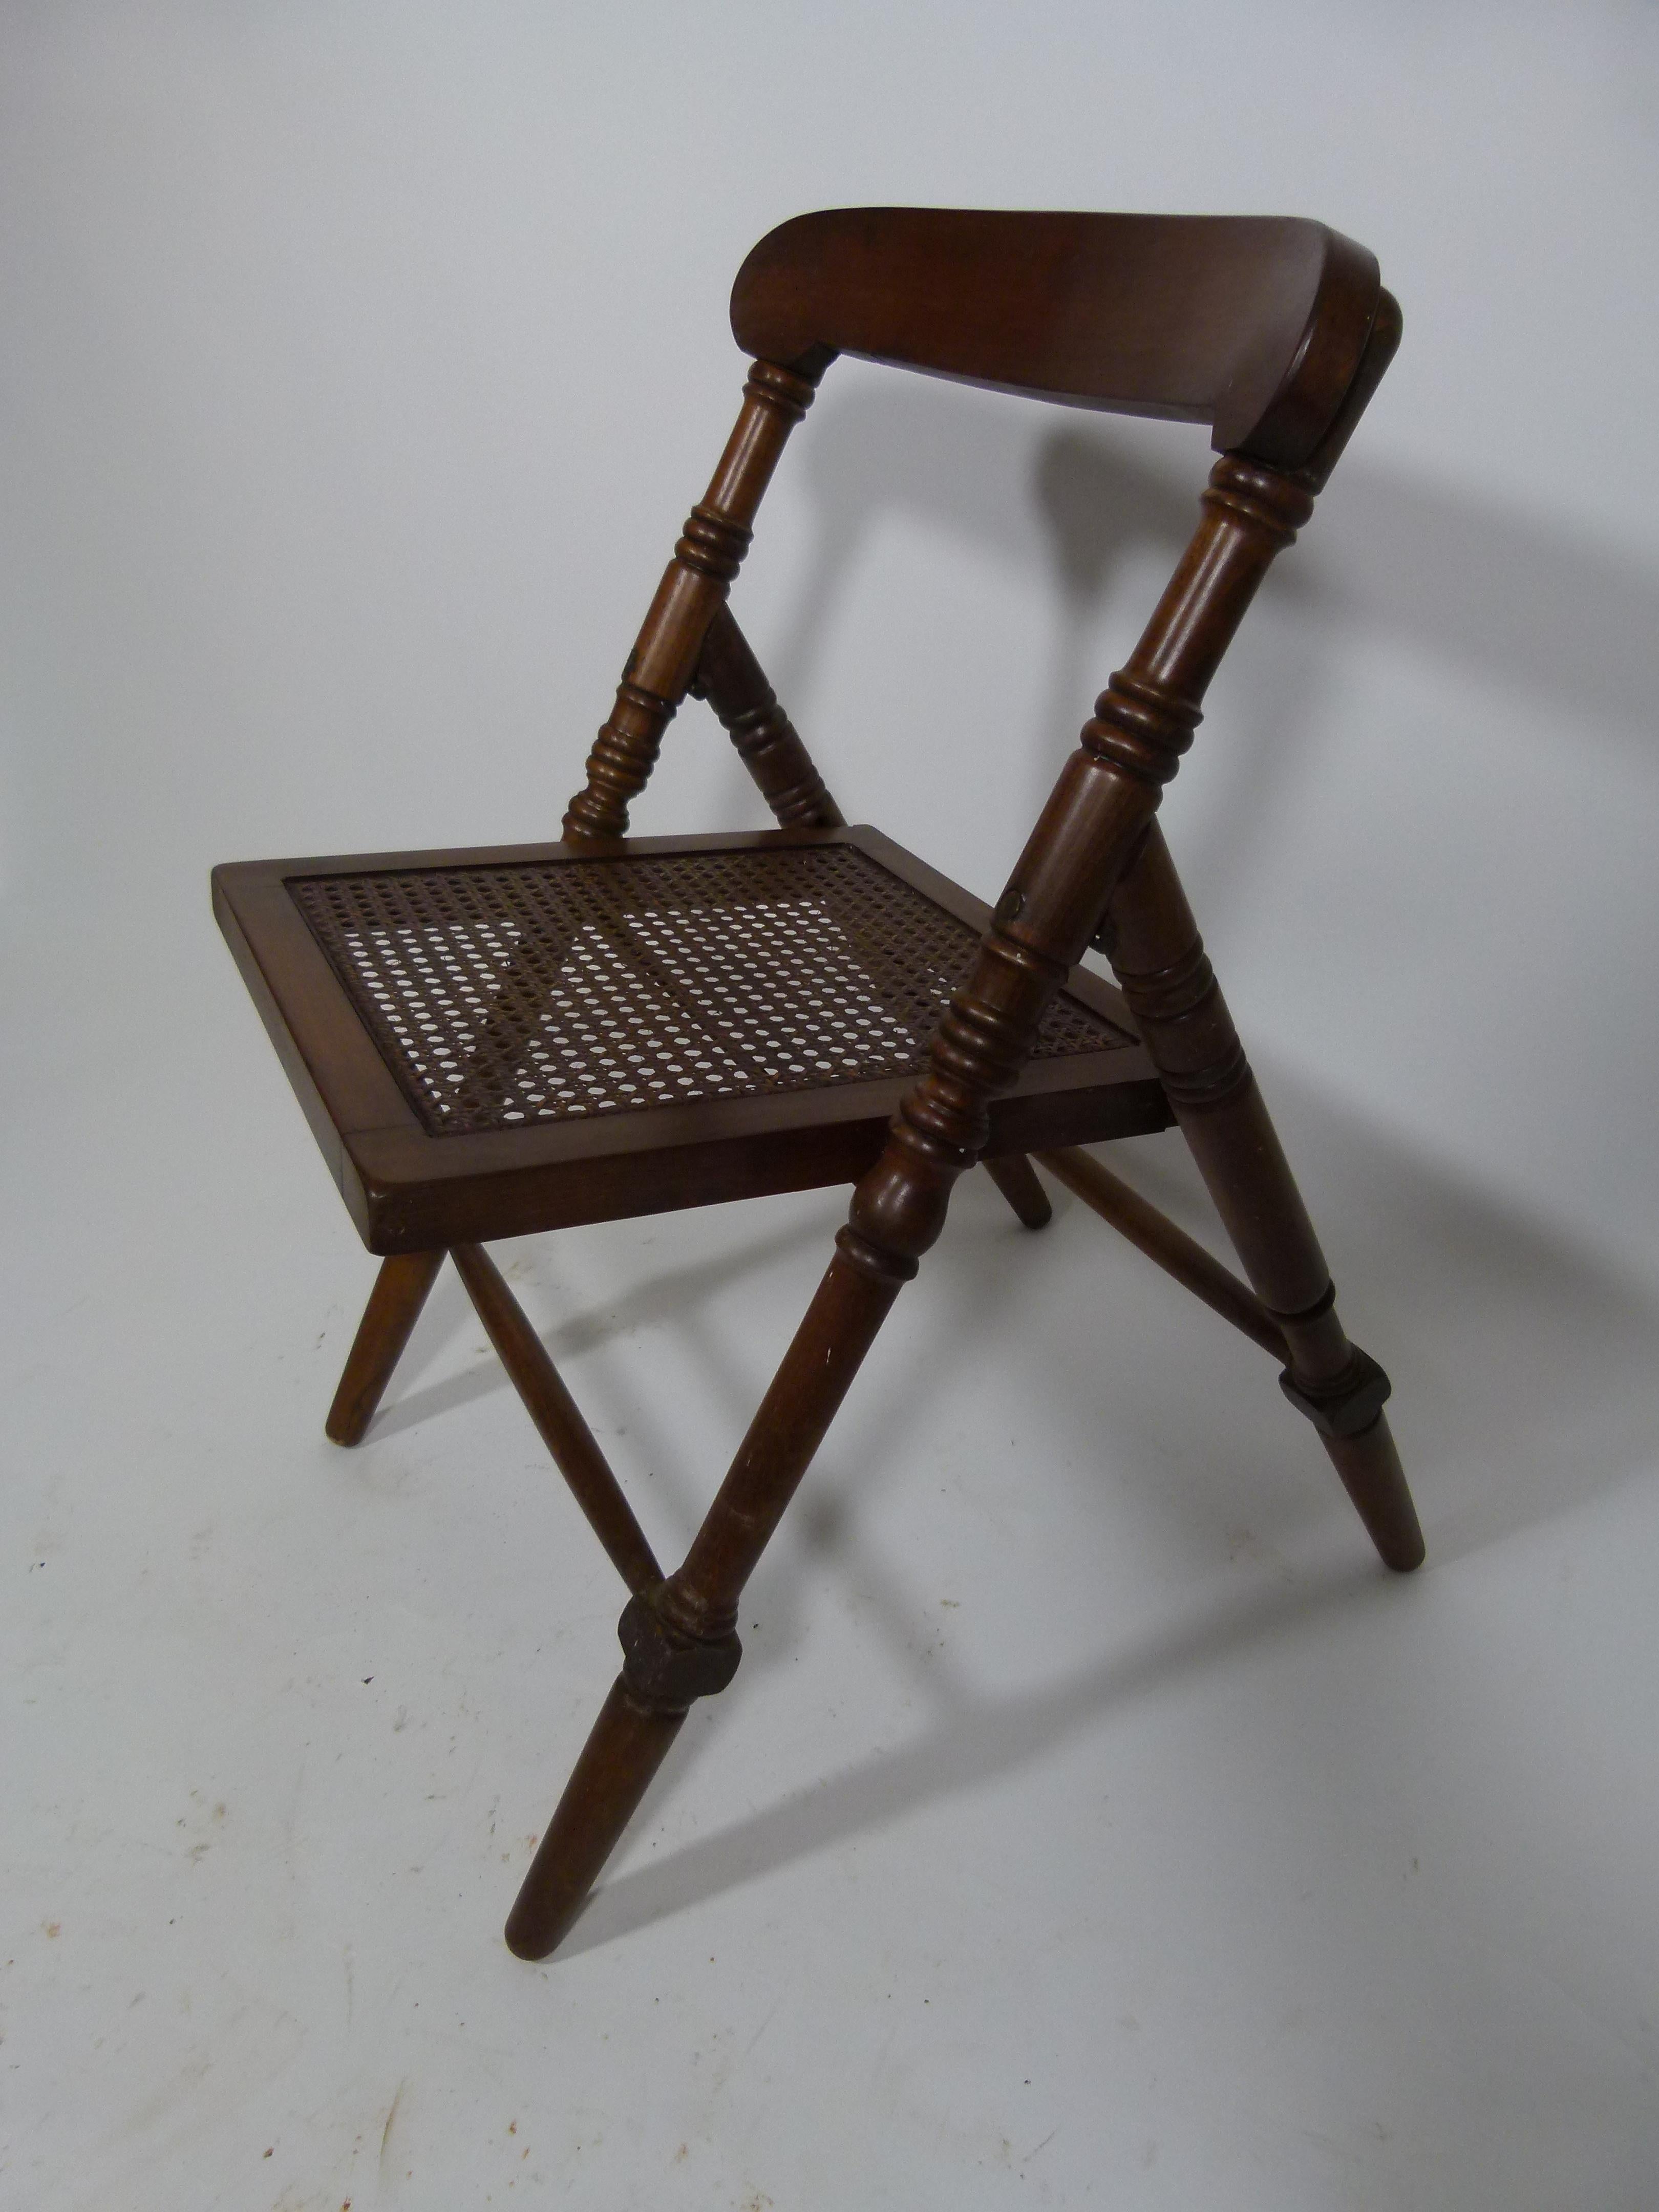 Art Nouveau 20th Century Gridded Seat Spanish Folding Chair